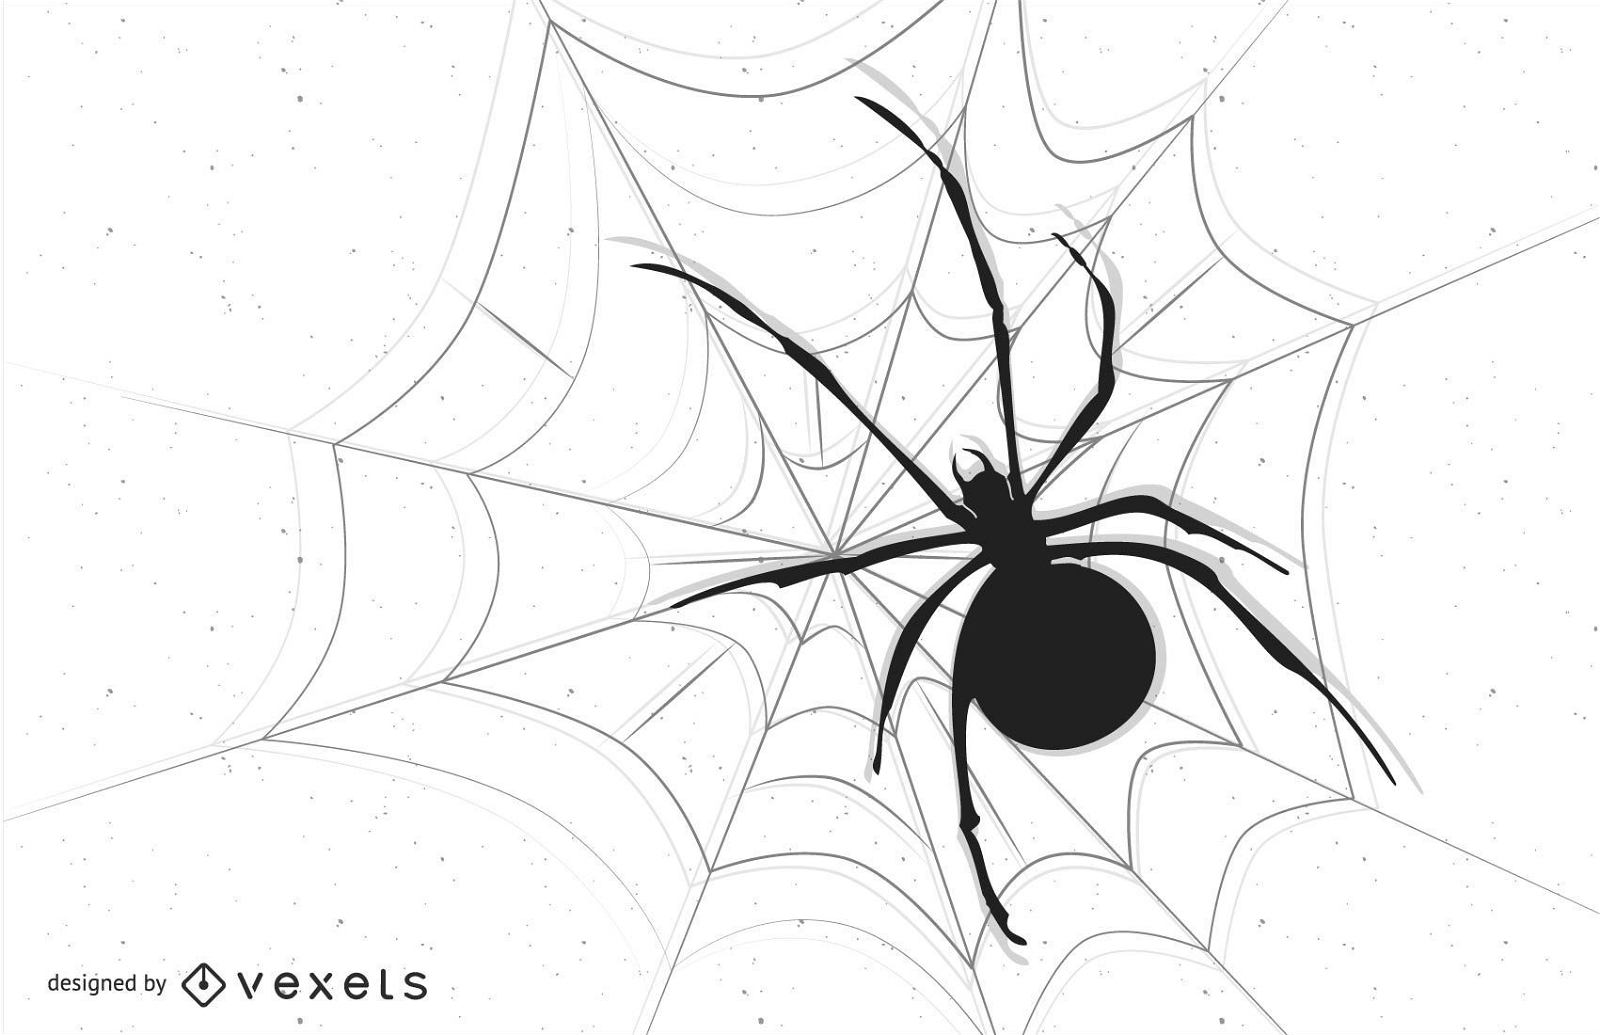 Spider Vector Image